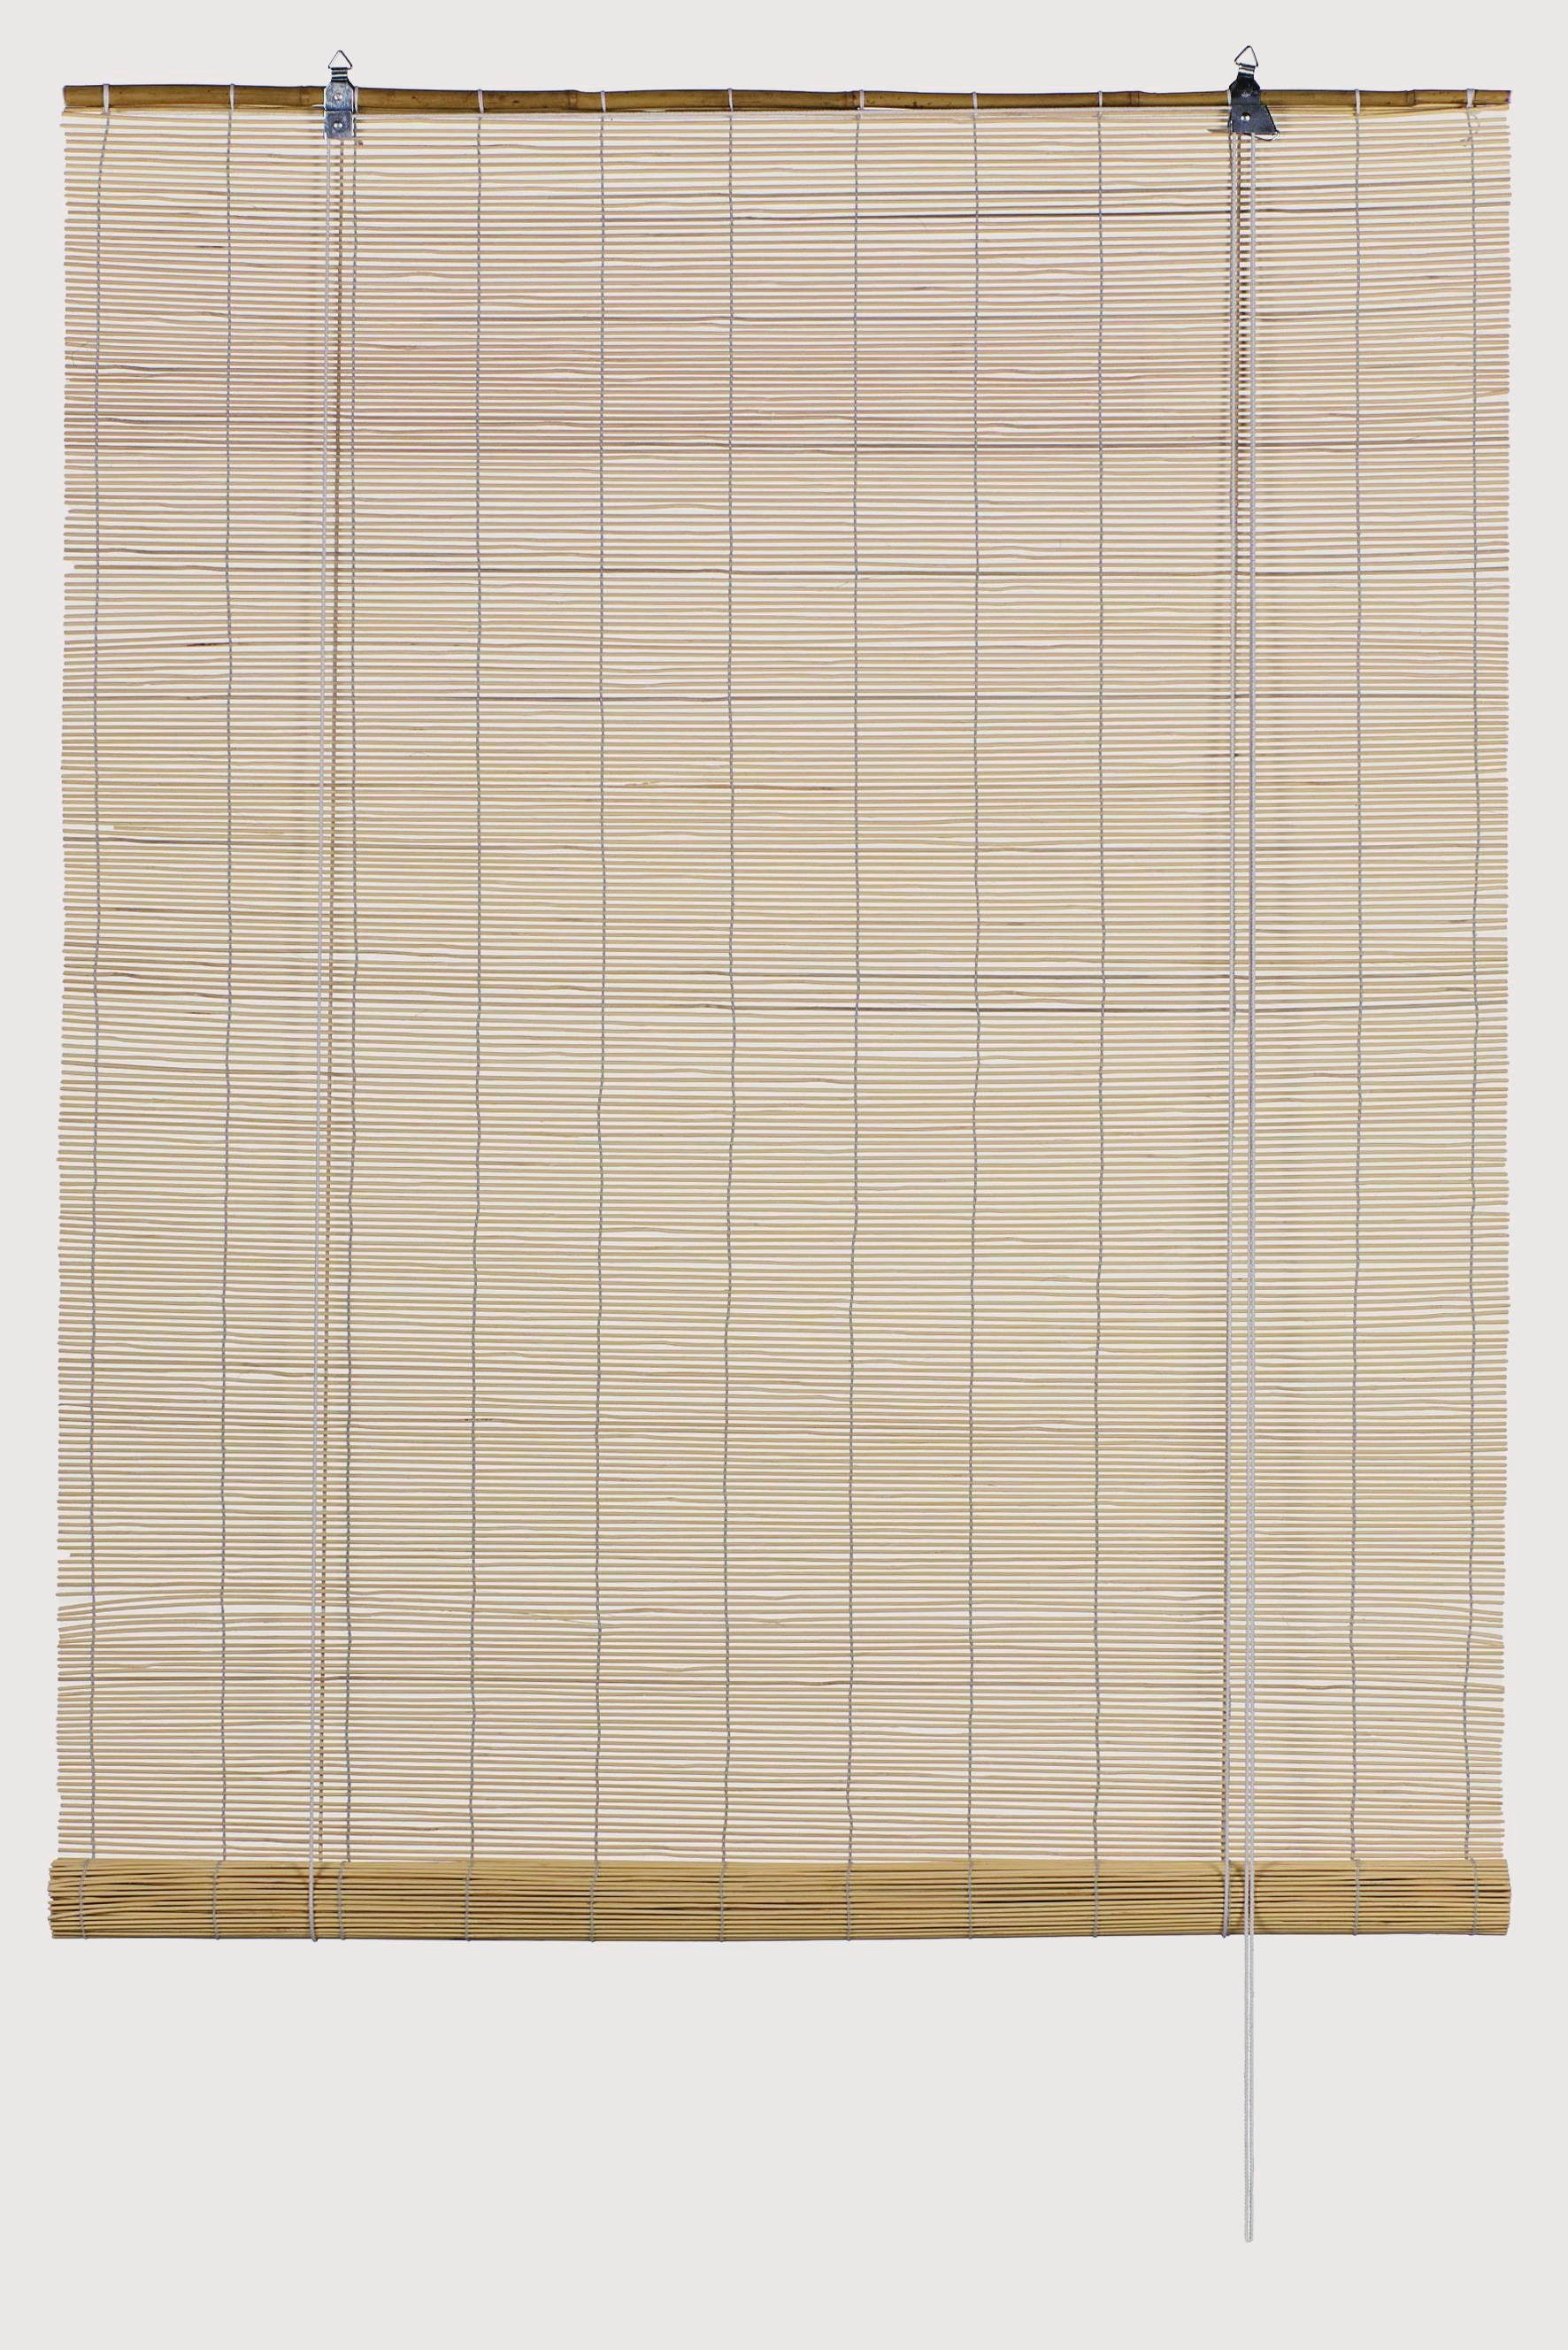 Rollo Gardinia Bambus-Rollo natur 140 x 160 cm, GARDINIA, Lichtschutz, standard